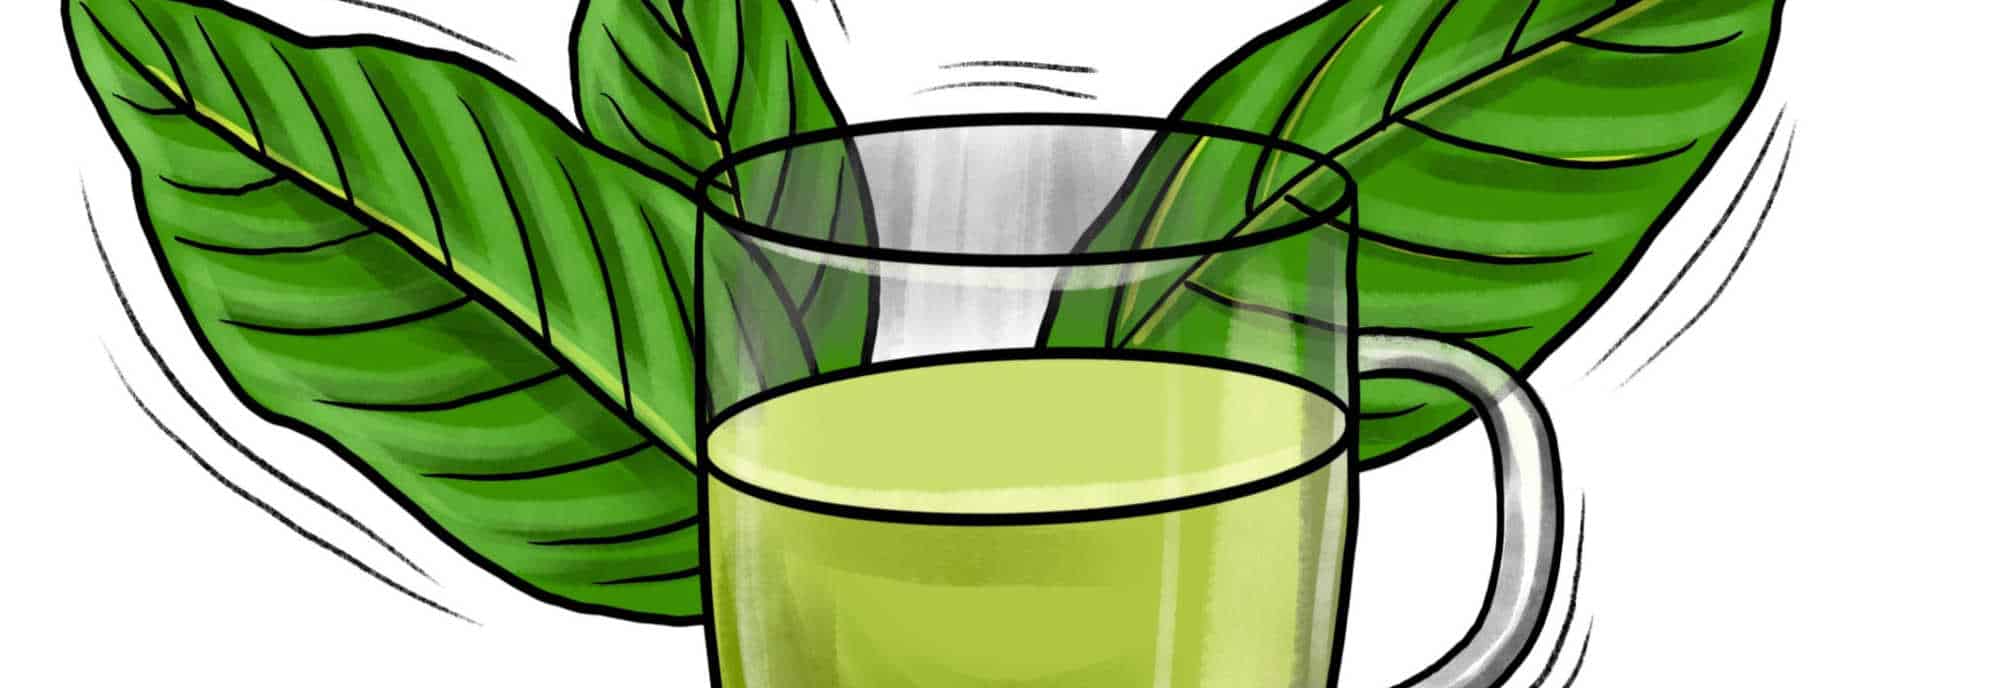 image of kratom leaves and juice